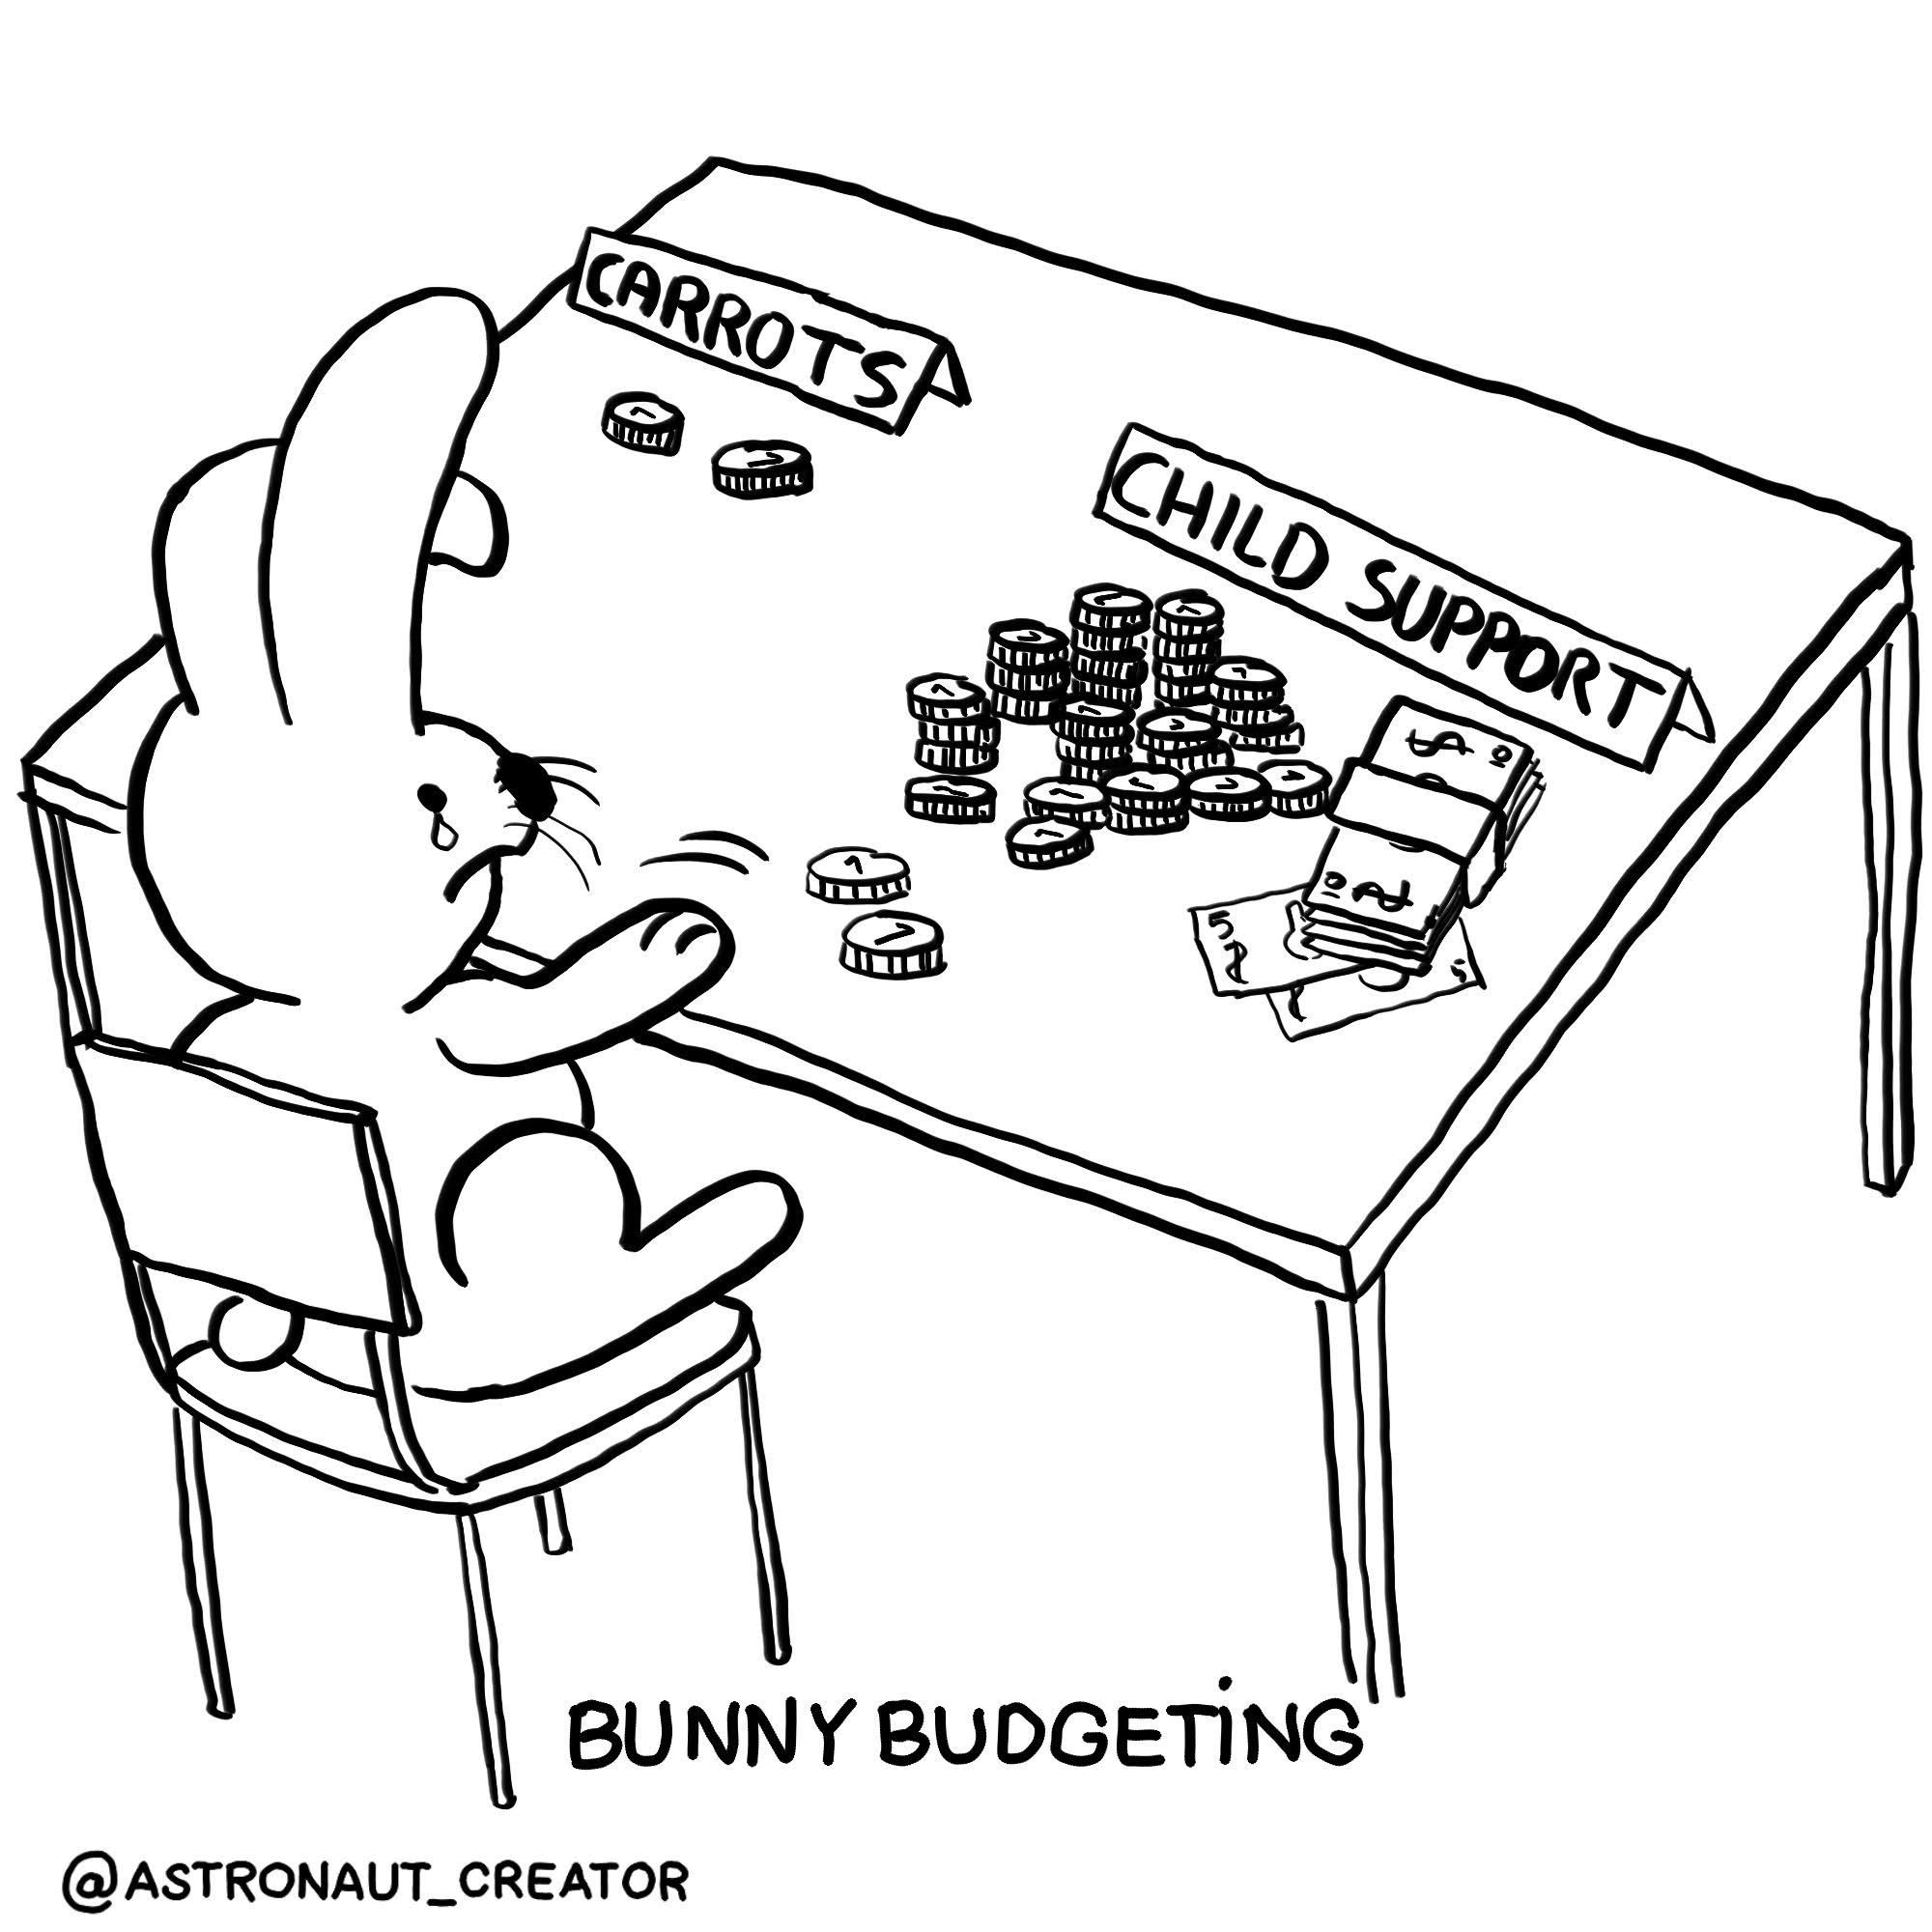 Bunny budgeting